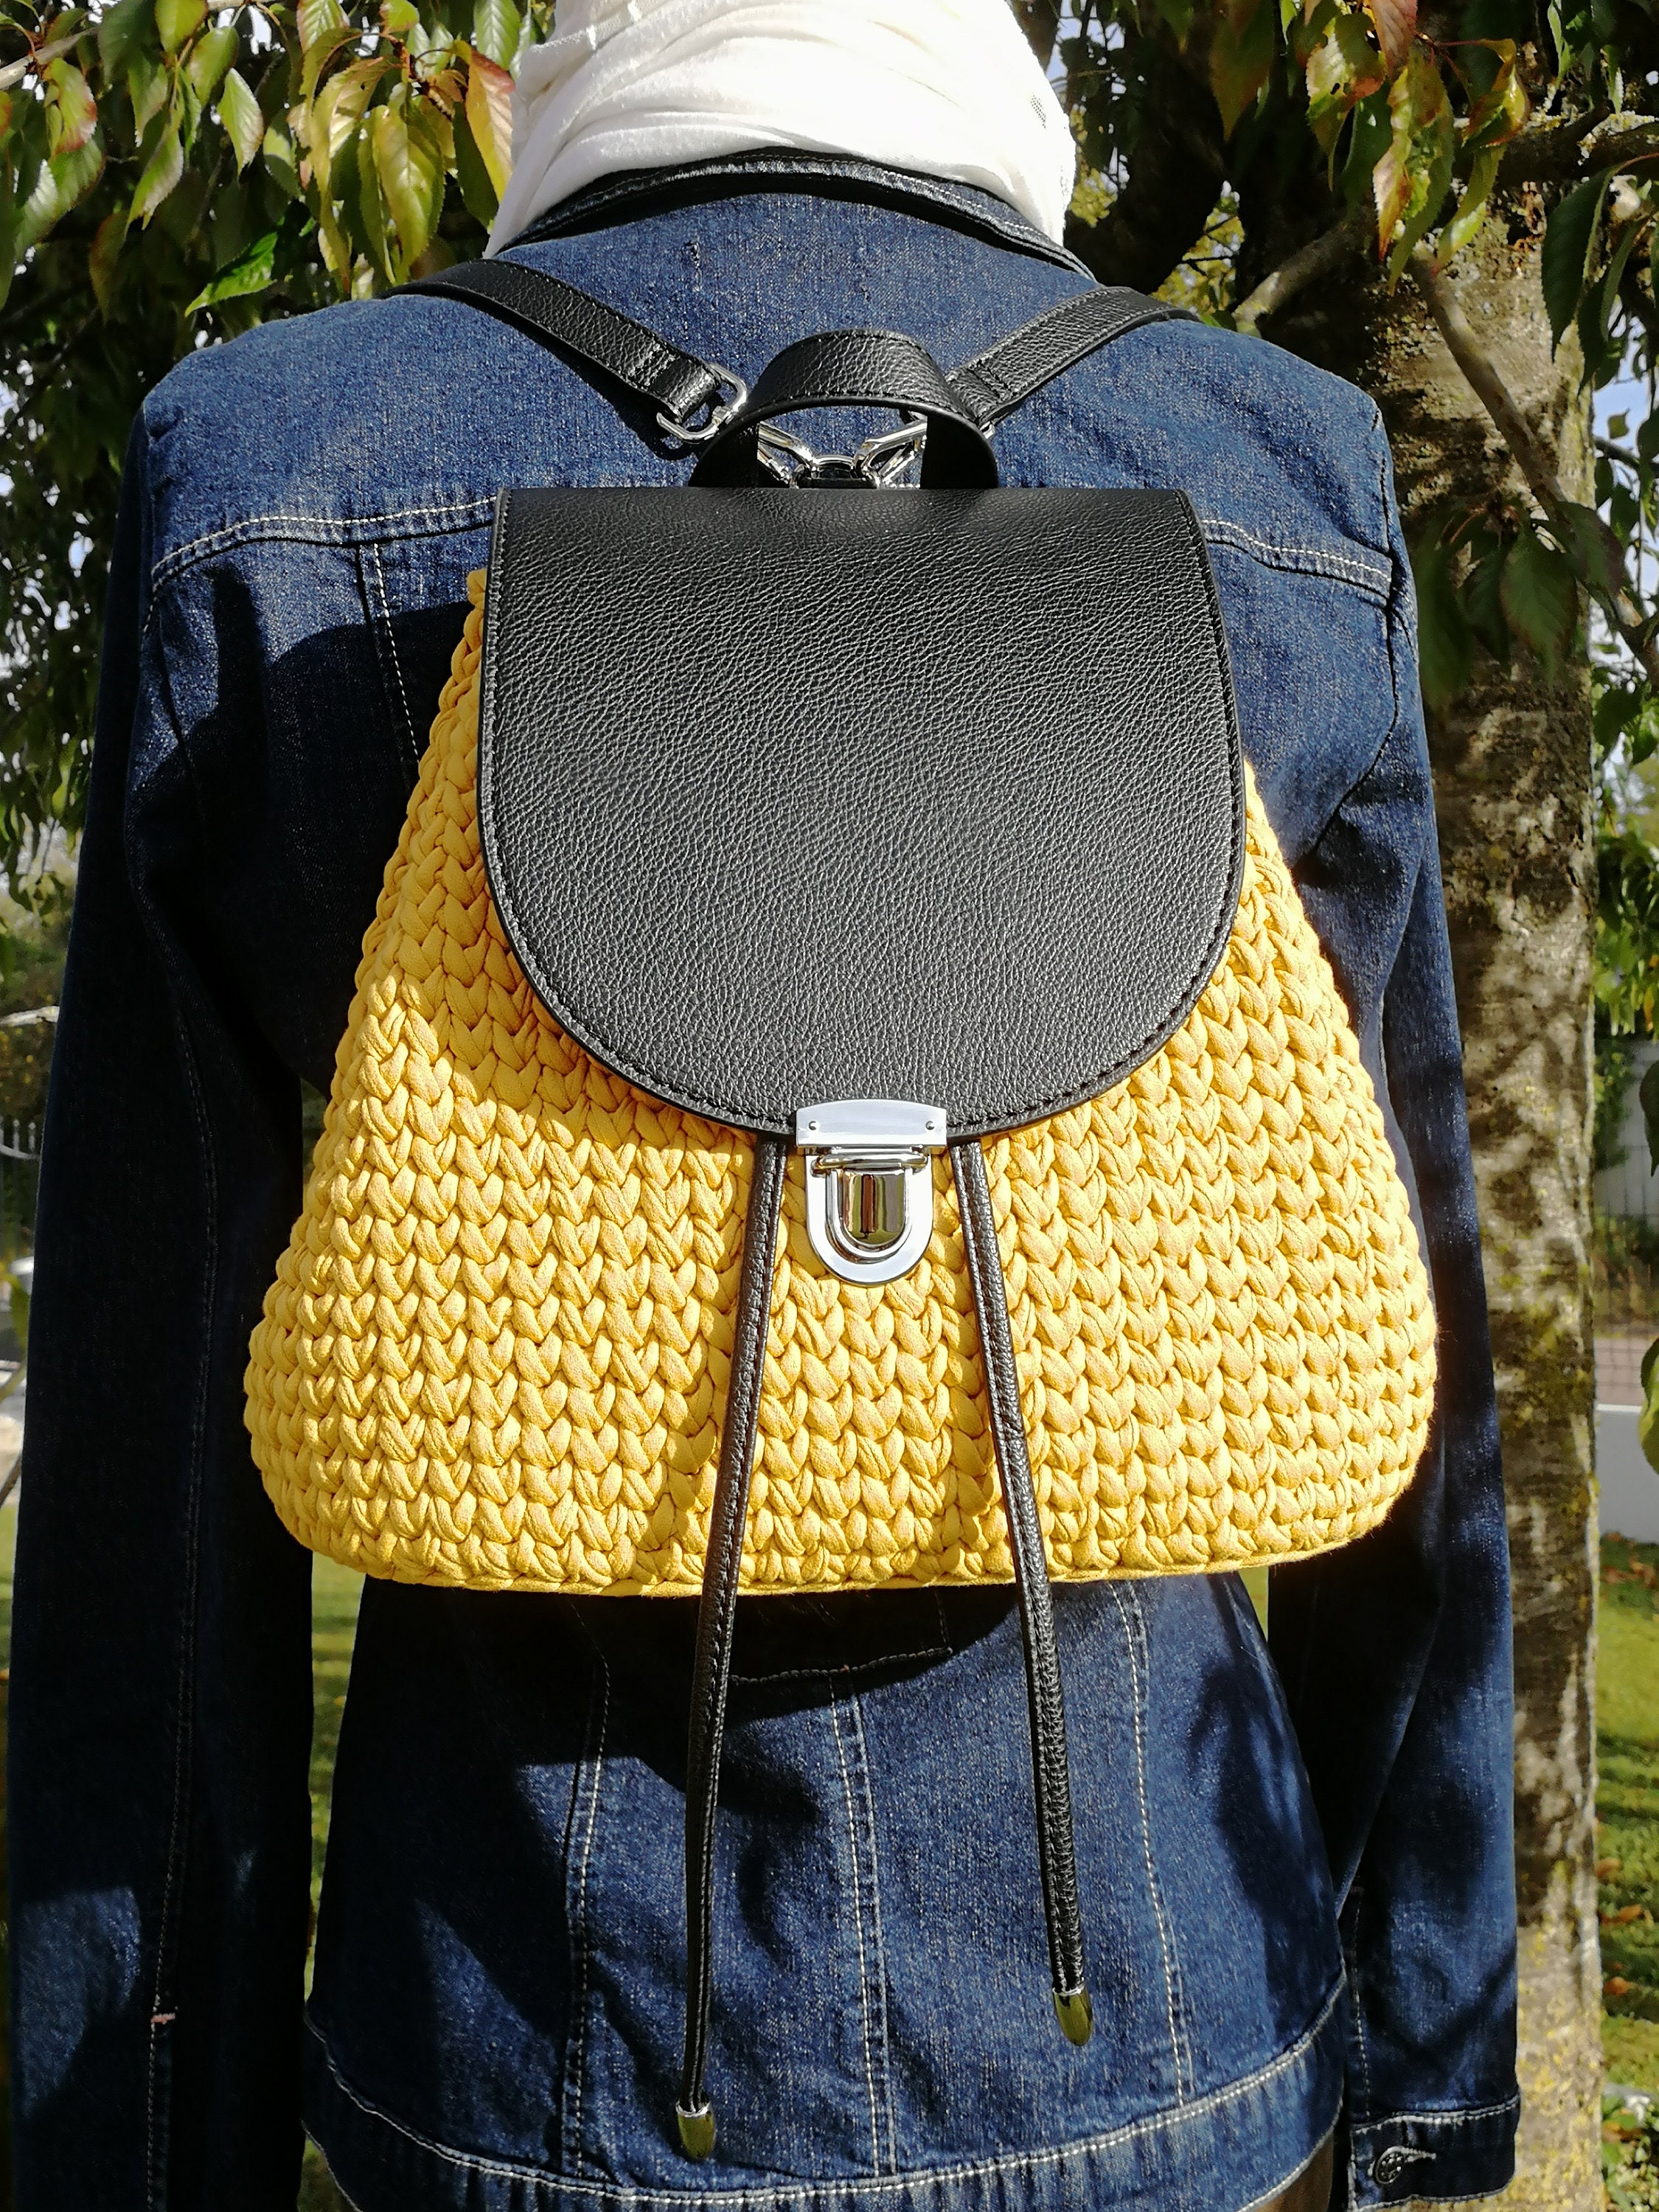 Premium Quality Crochet Todler Backpack / Tshirt Yarn Bag